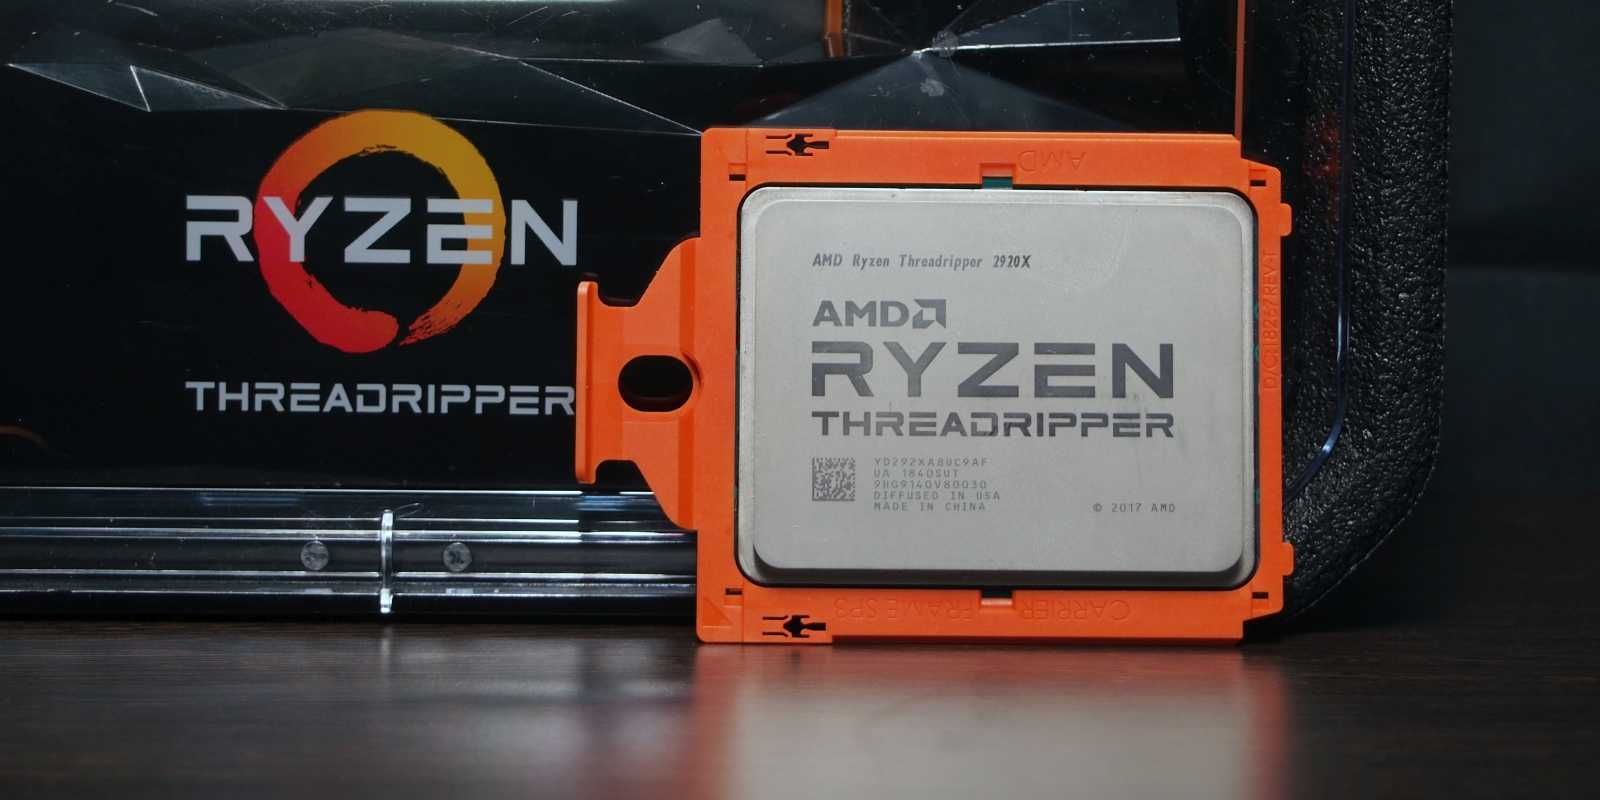 Amd threadripper pro 5995wx. Процессор AMD Ryzen Threadripper Pro 5995wx OEM. Процессор AMD Ryzen Threadripper Pro 3955wx Box. AMD Threadripper 5990x. AMD Ryzen Threadripper Pro 5995wx архитектура.